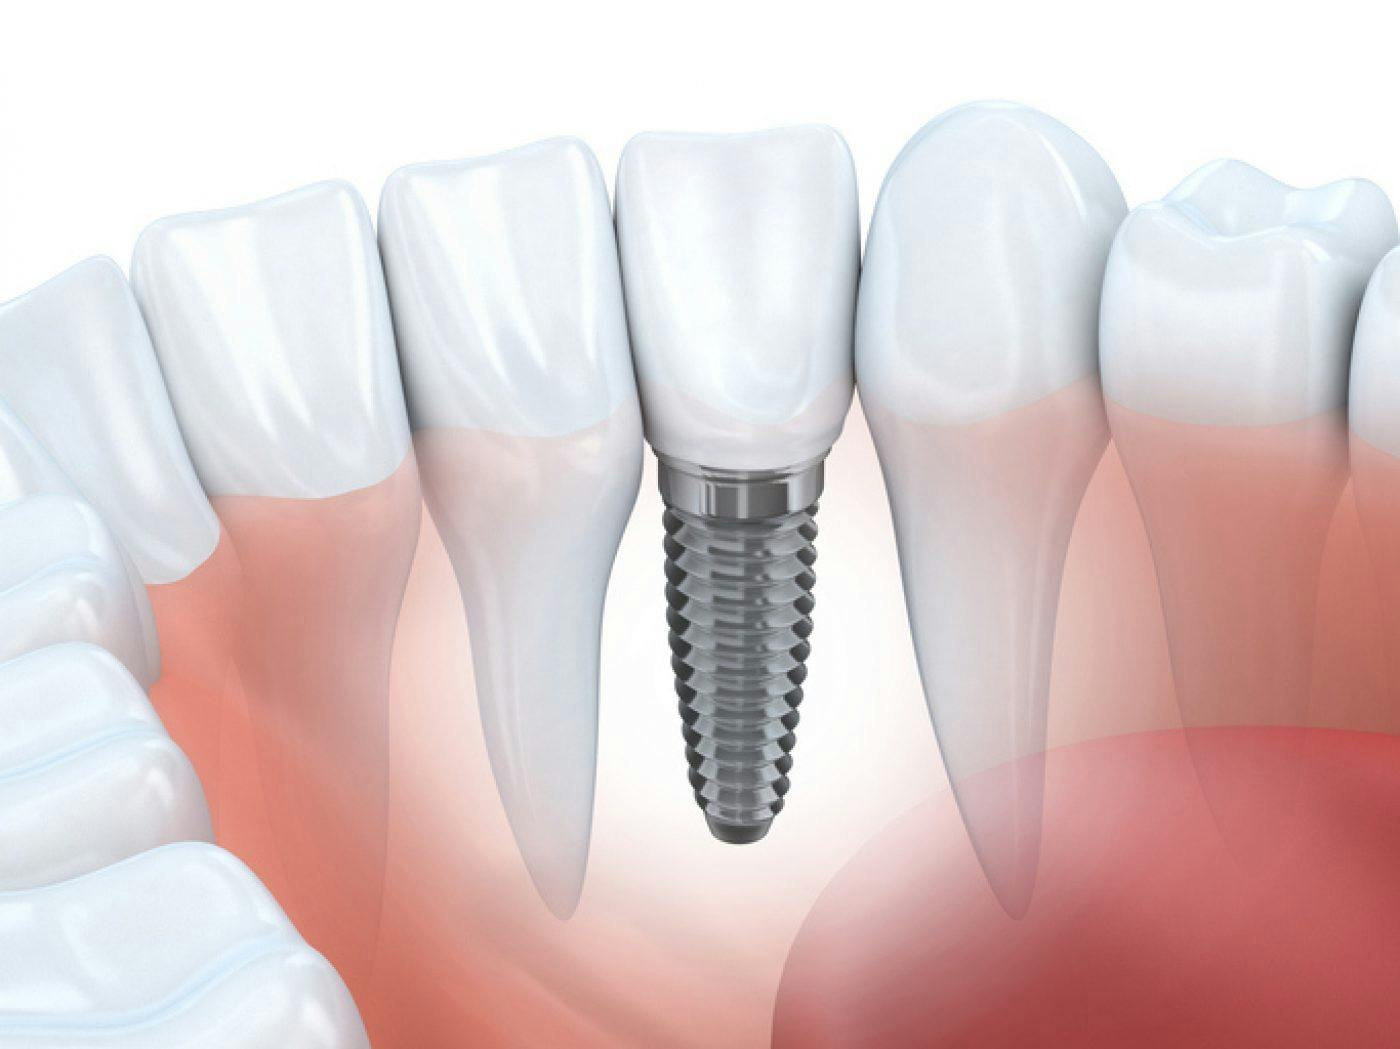 Single Implant Uppingham Dental Implant Clinic